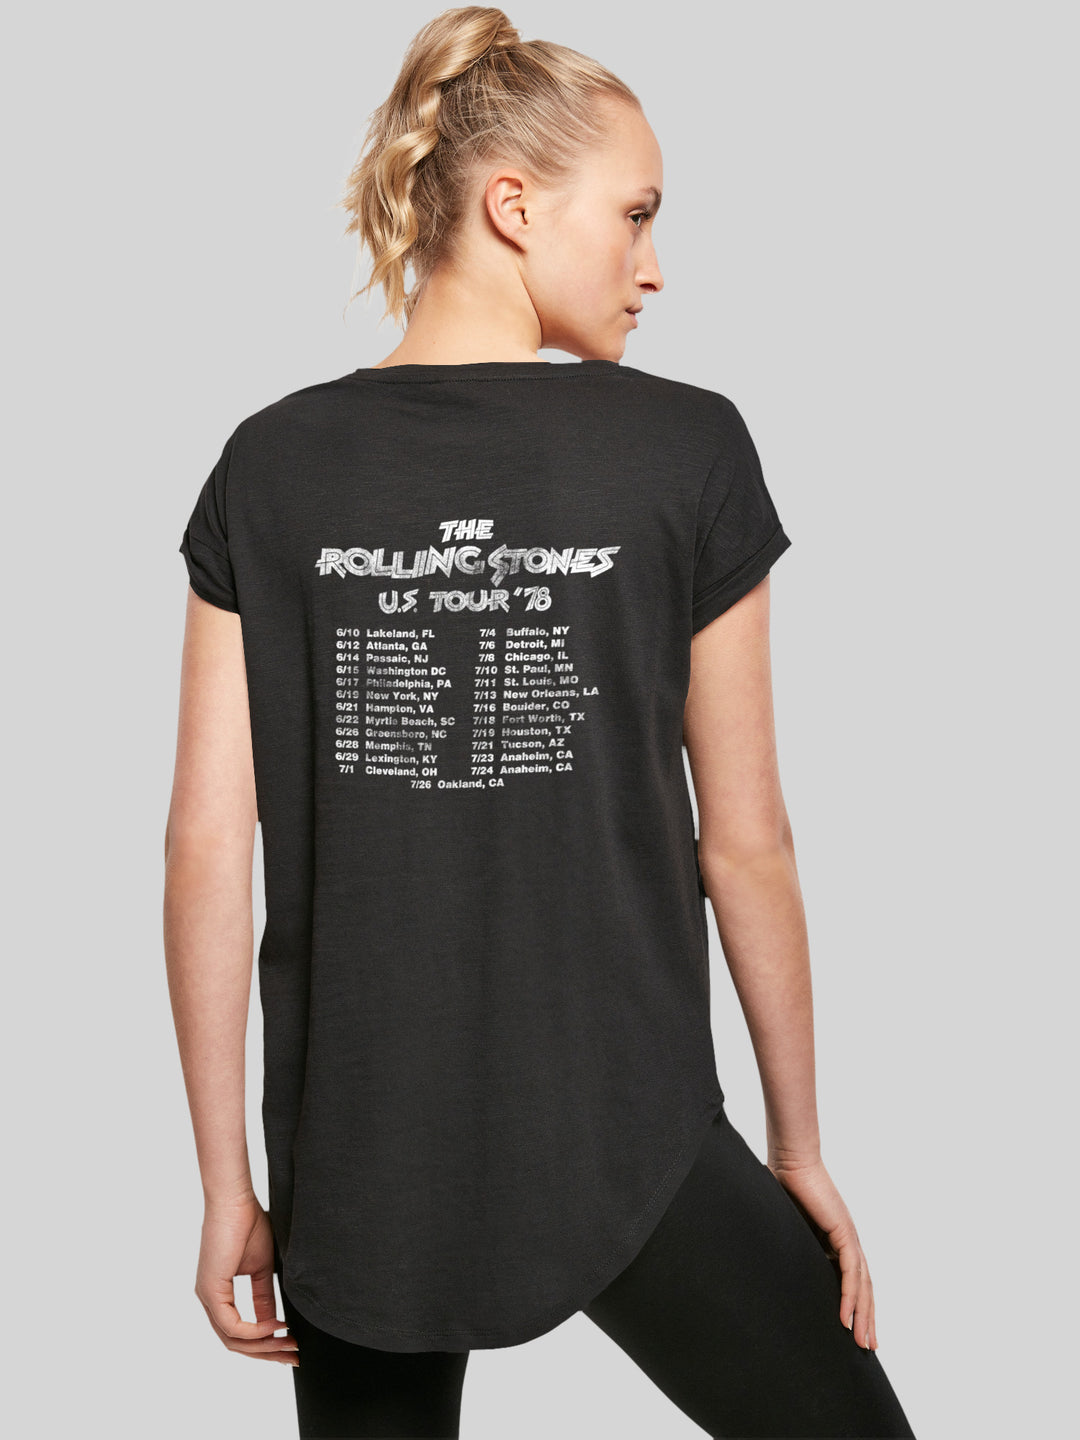 The Rolling Stones T-Shirt | US Tour '78 | Premium Long Ladies Tee